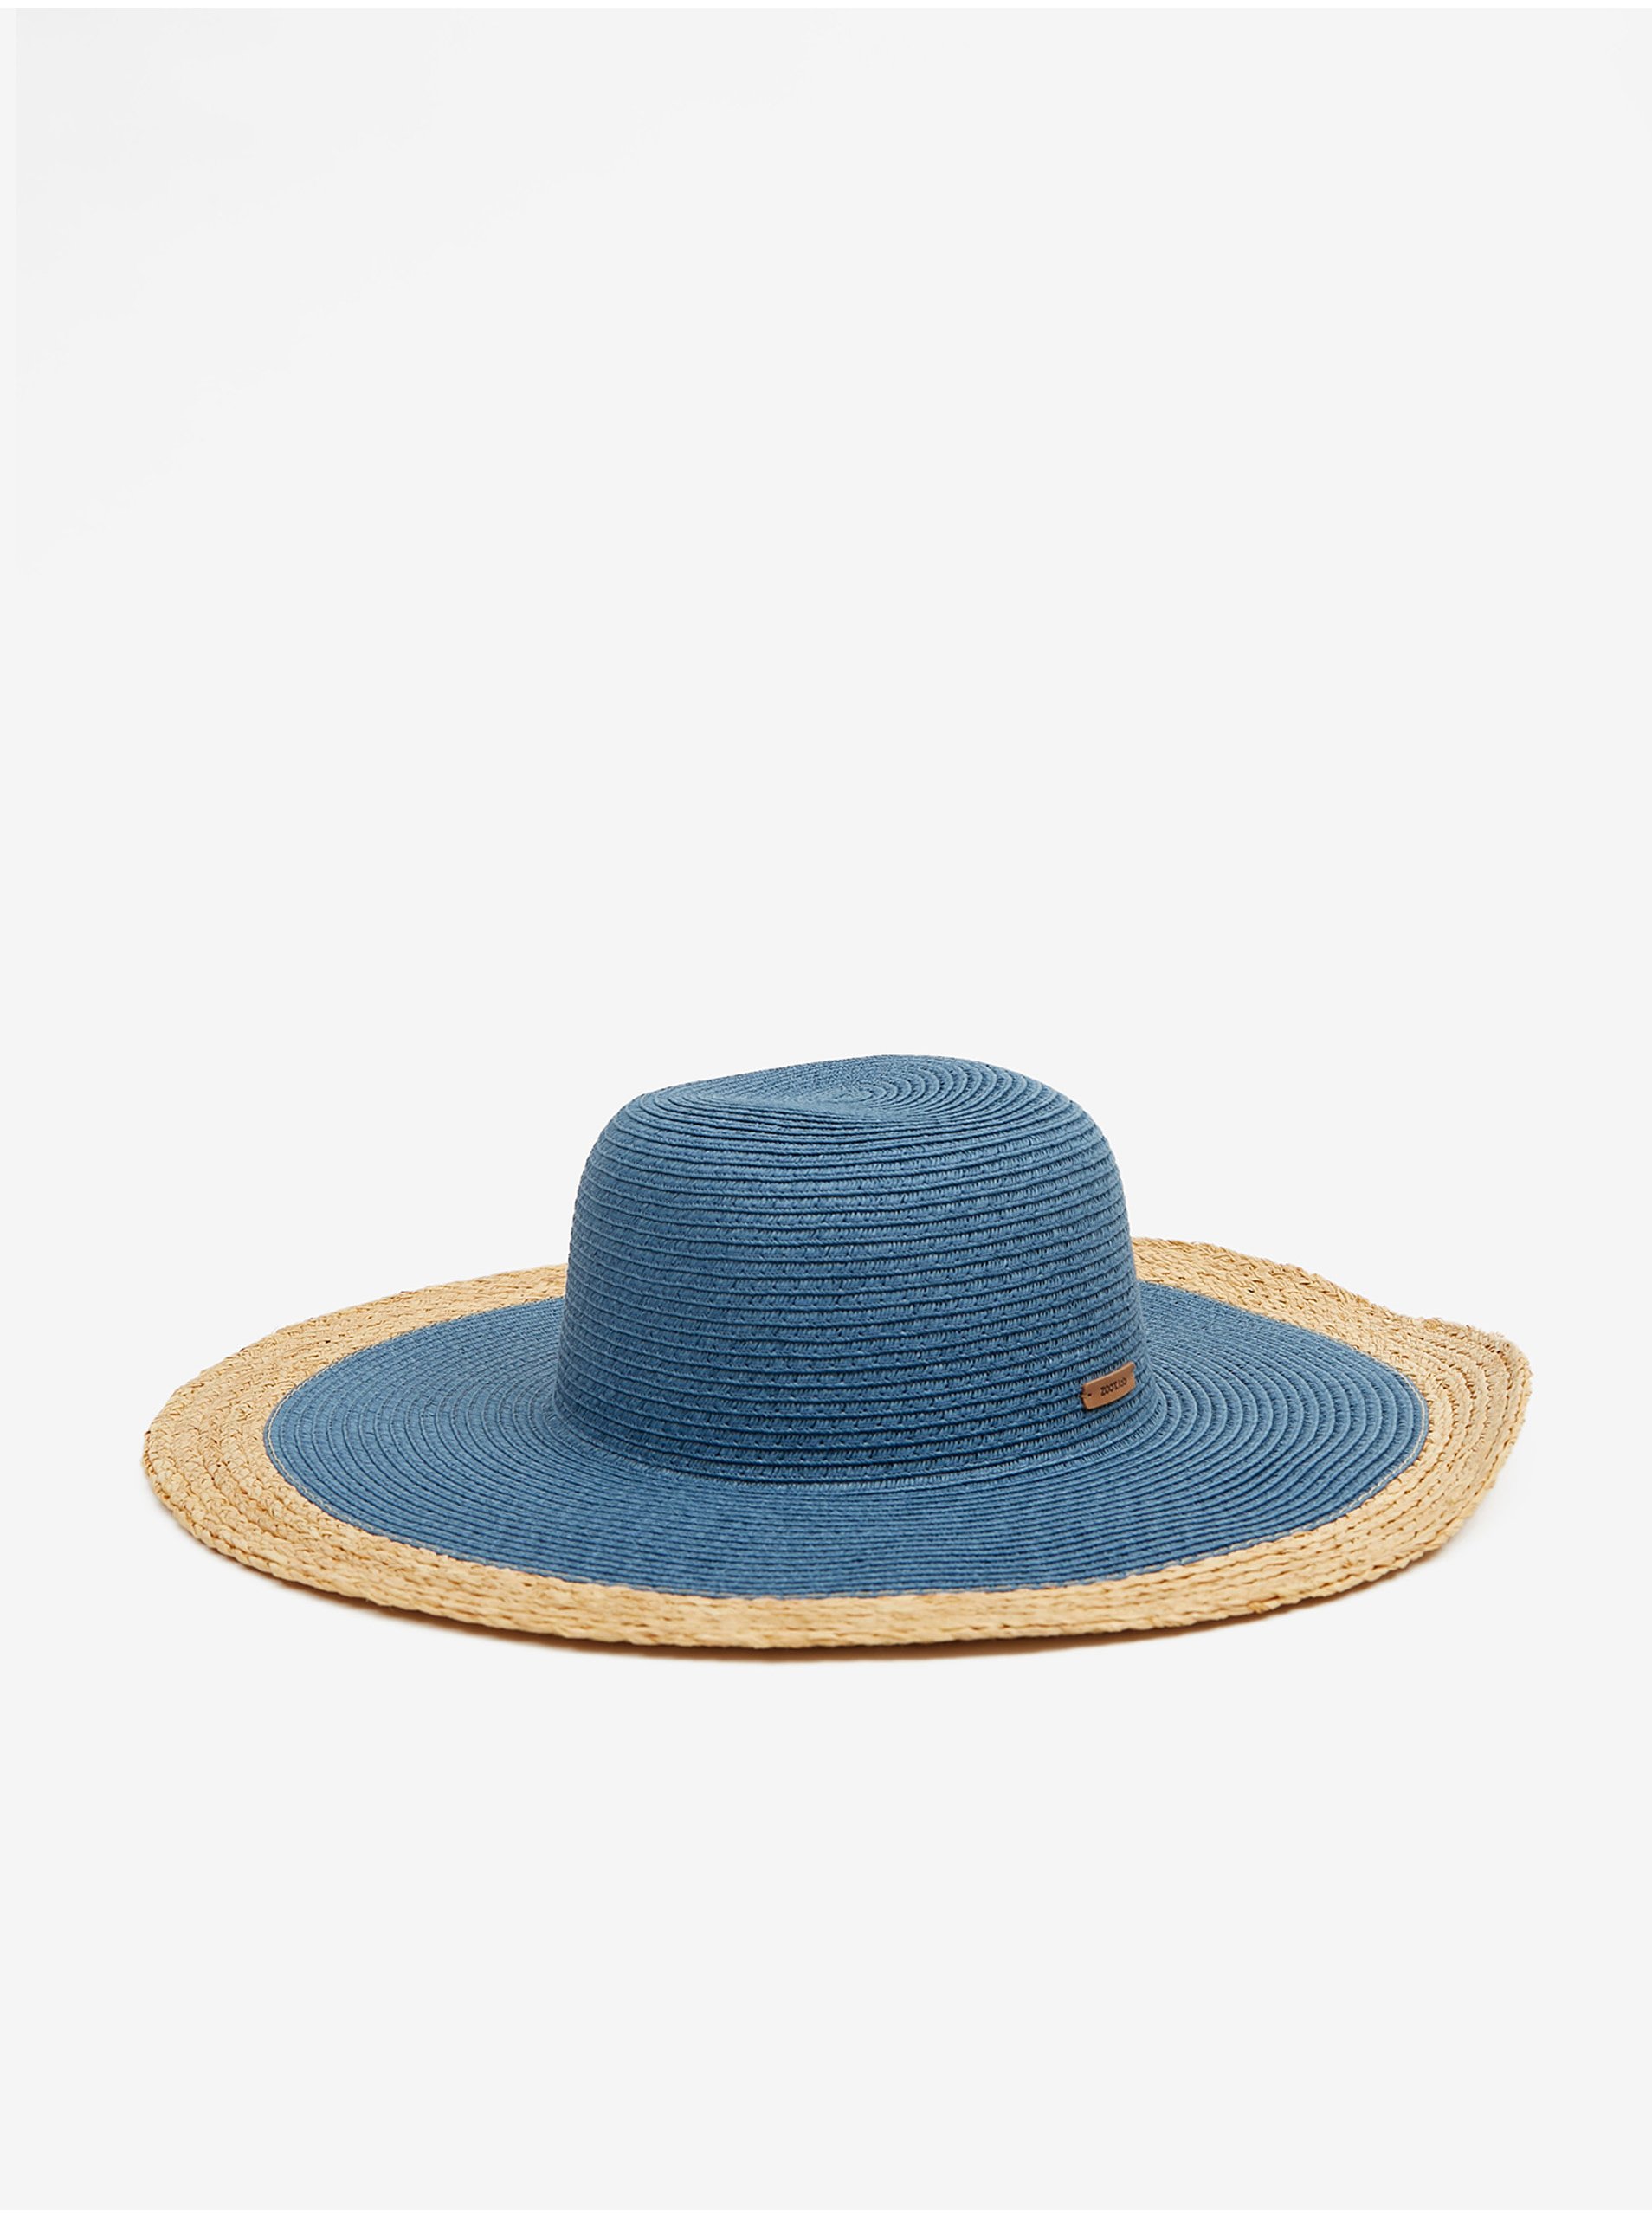 E-shop Hnedo-modrý dámsky slamený klobúk ZOOT.lab Lysbet